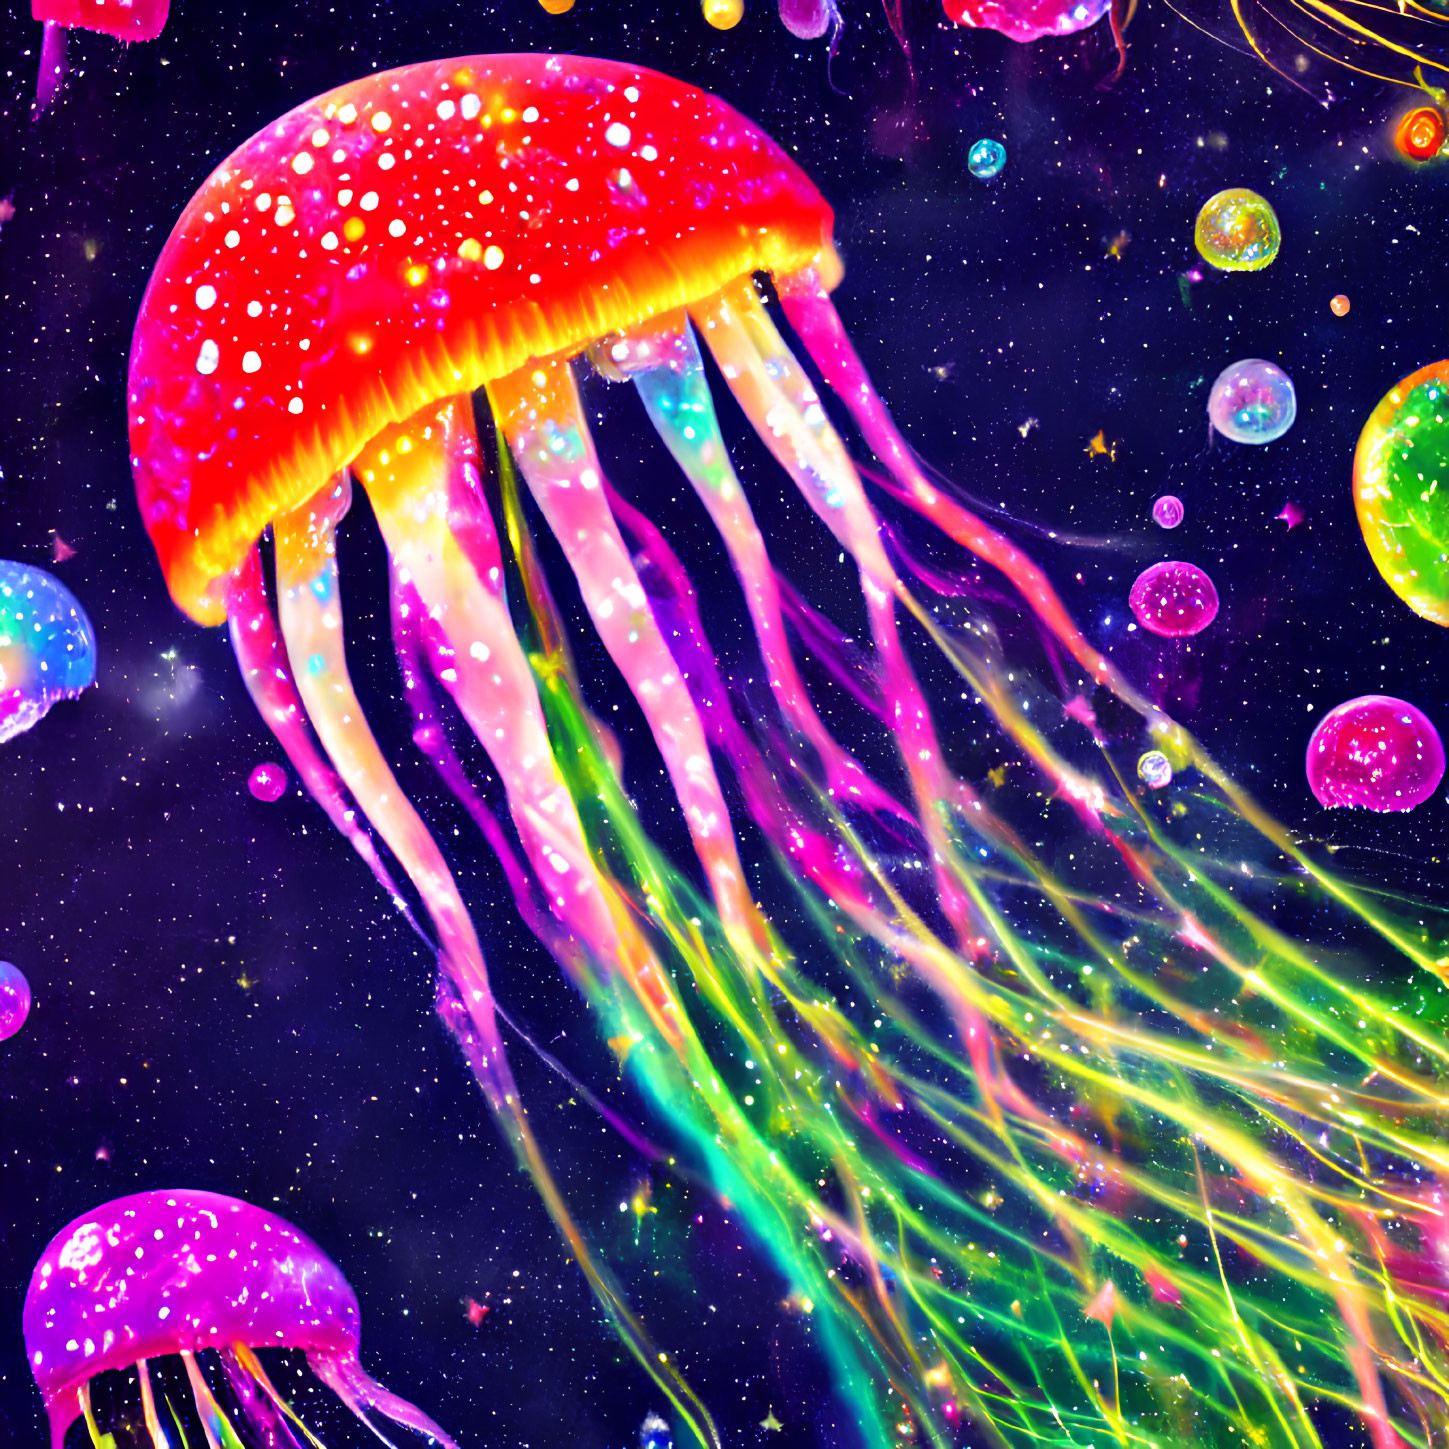 Neon-colored jellyfish in cosmic galaxy artwork